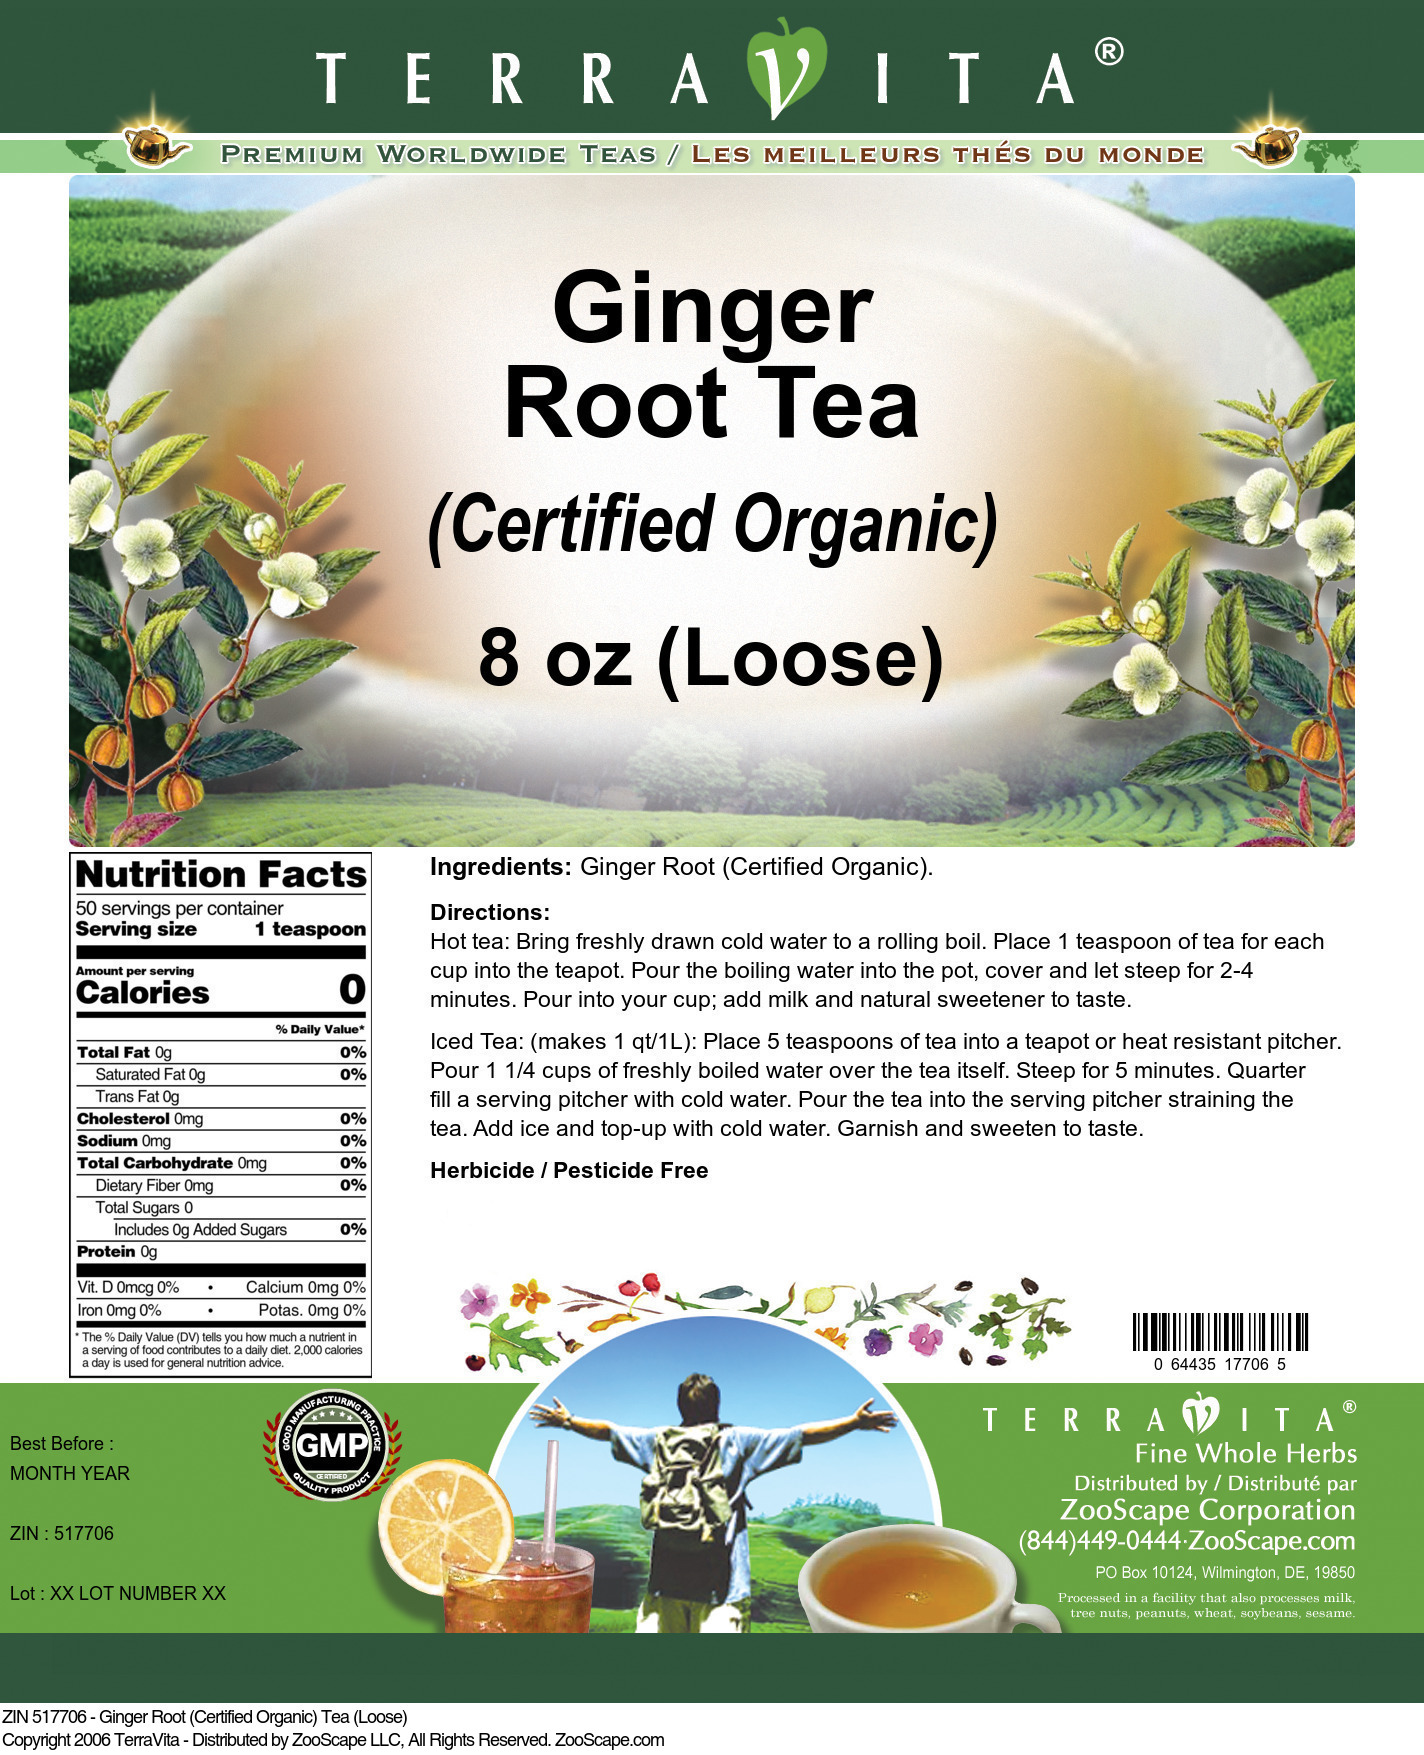 Ginger Root (Certified Organic) Tea (Loose) - Label